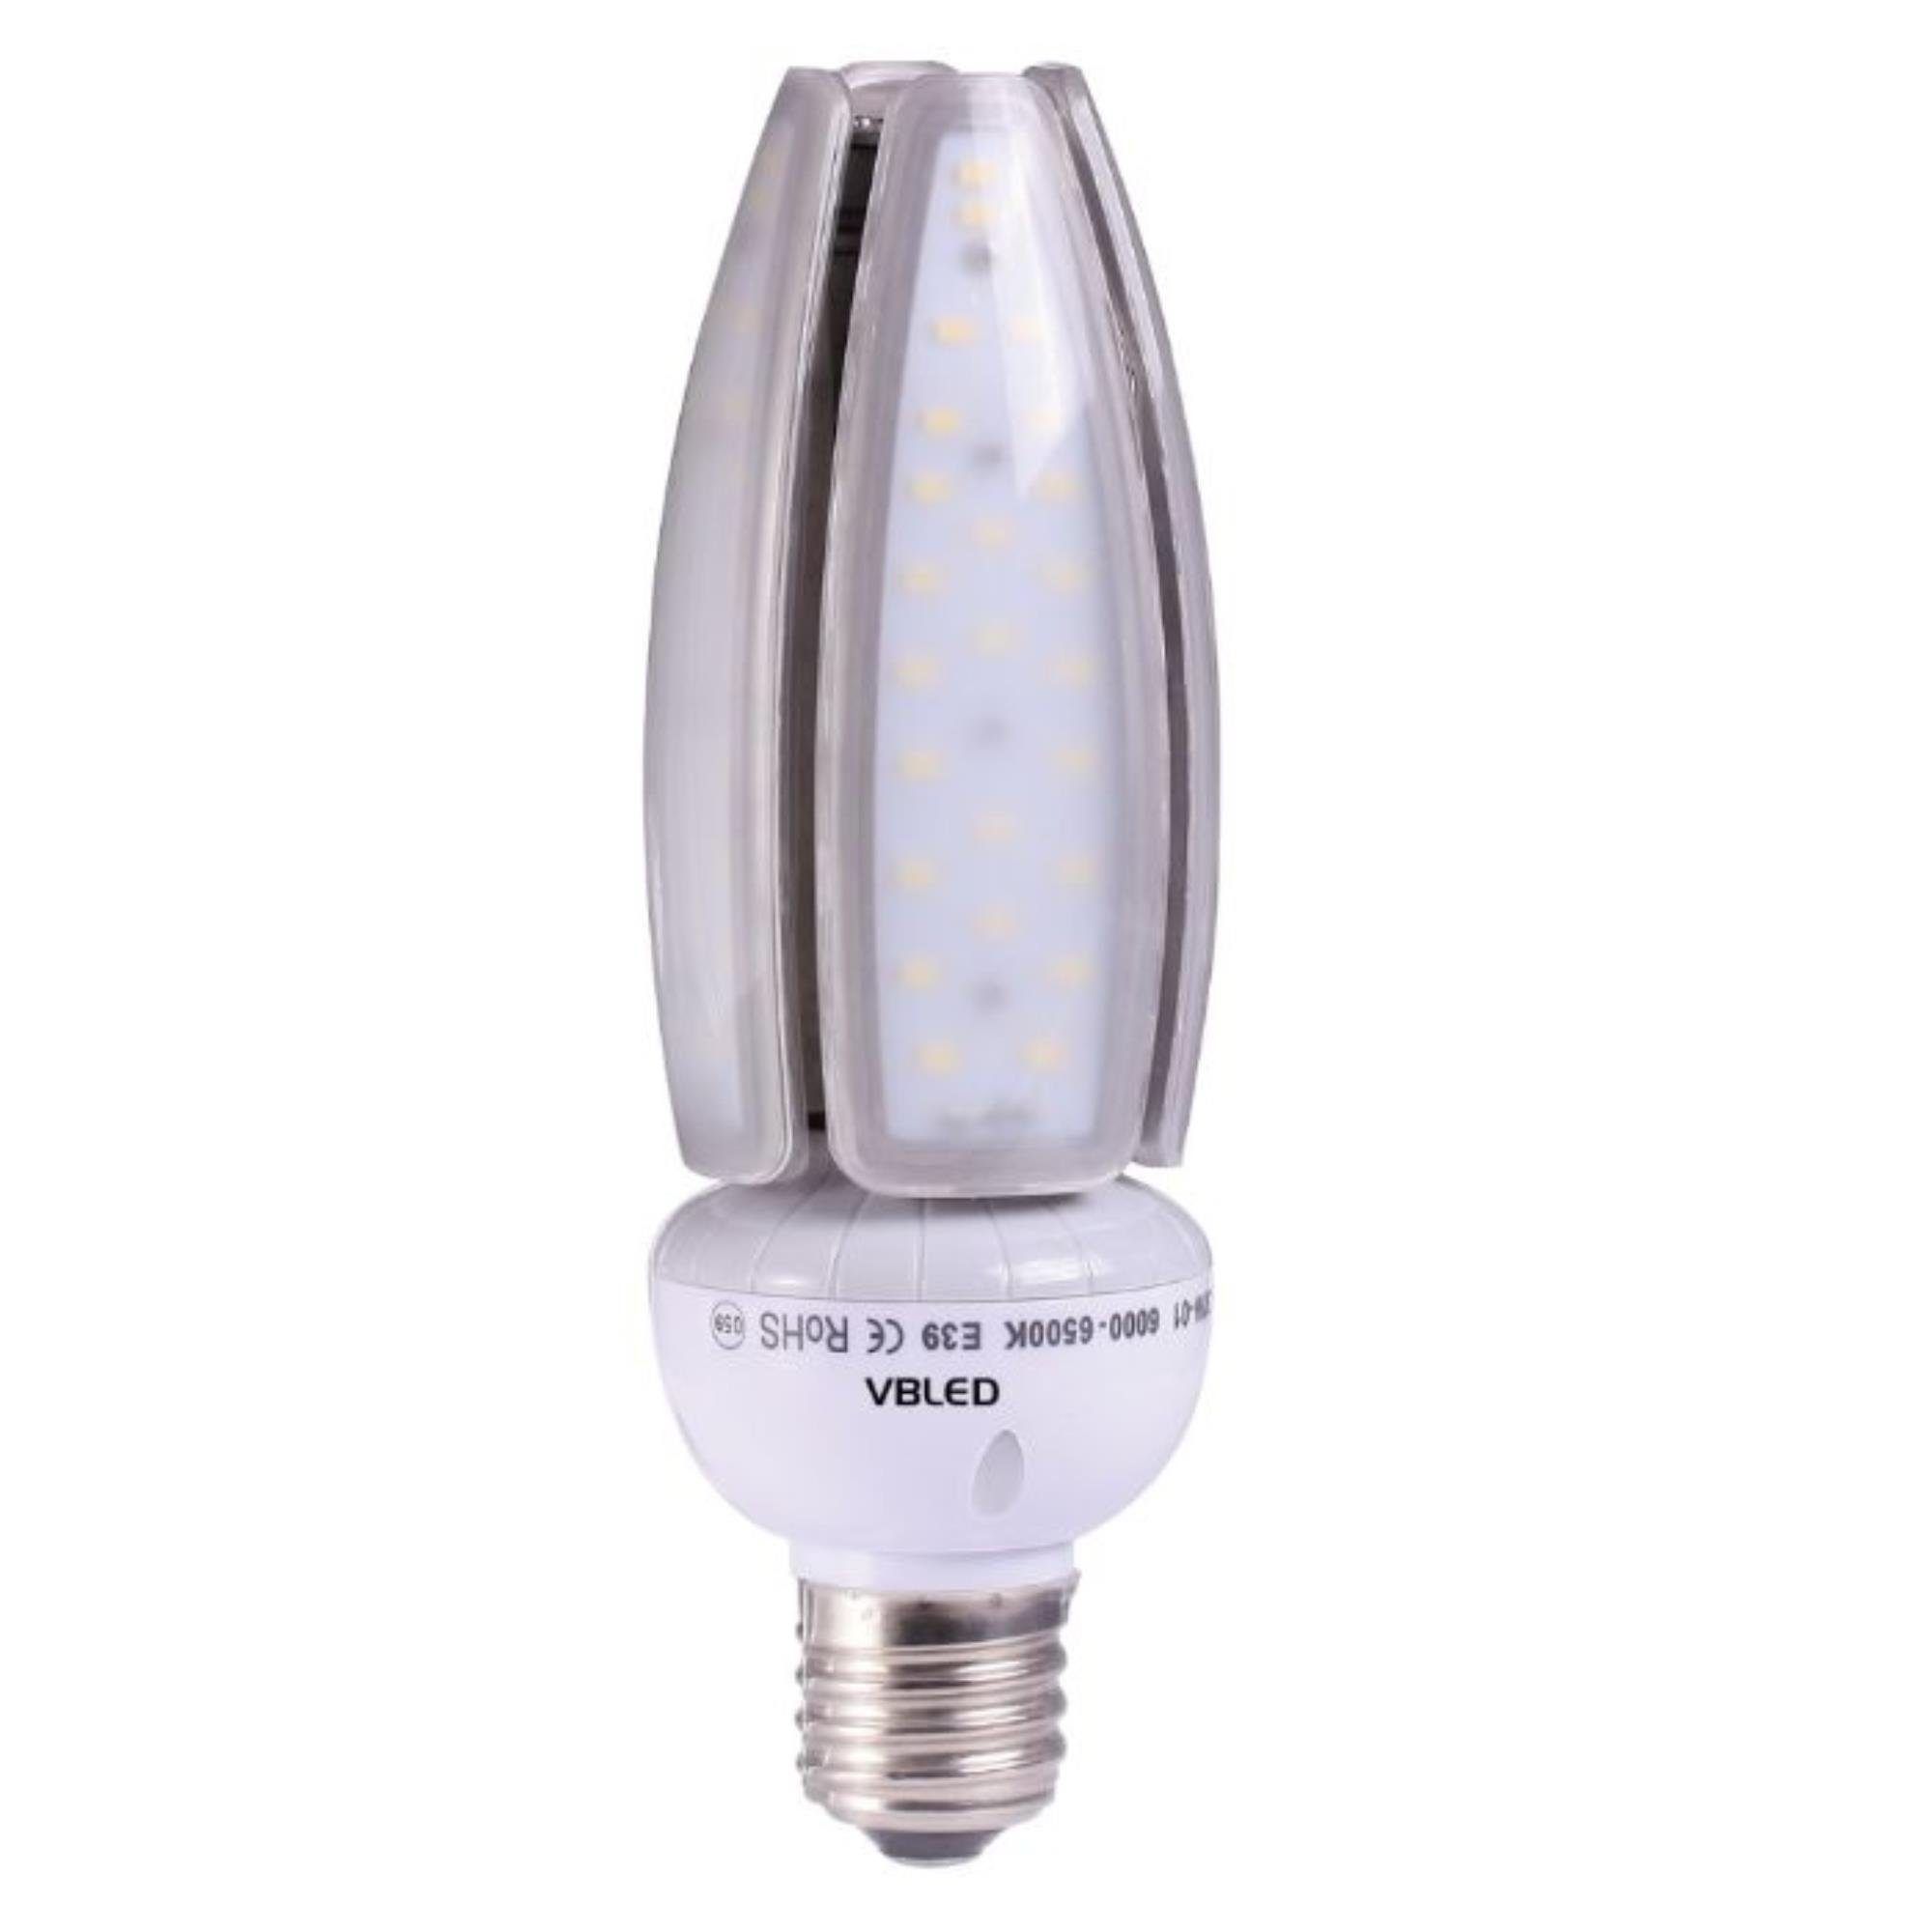 VBLED LED-Leuchtmittel HQL LED Ersatzlampe E27 30W LED Corn Birne, 4000K, E27, 1 St., neutralweiß